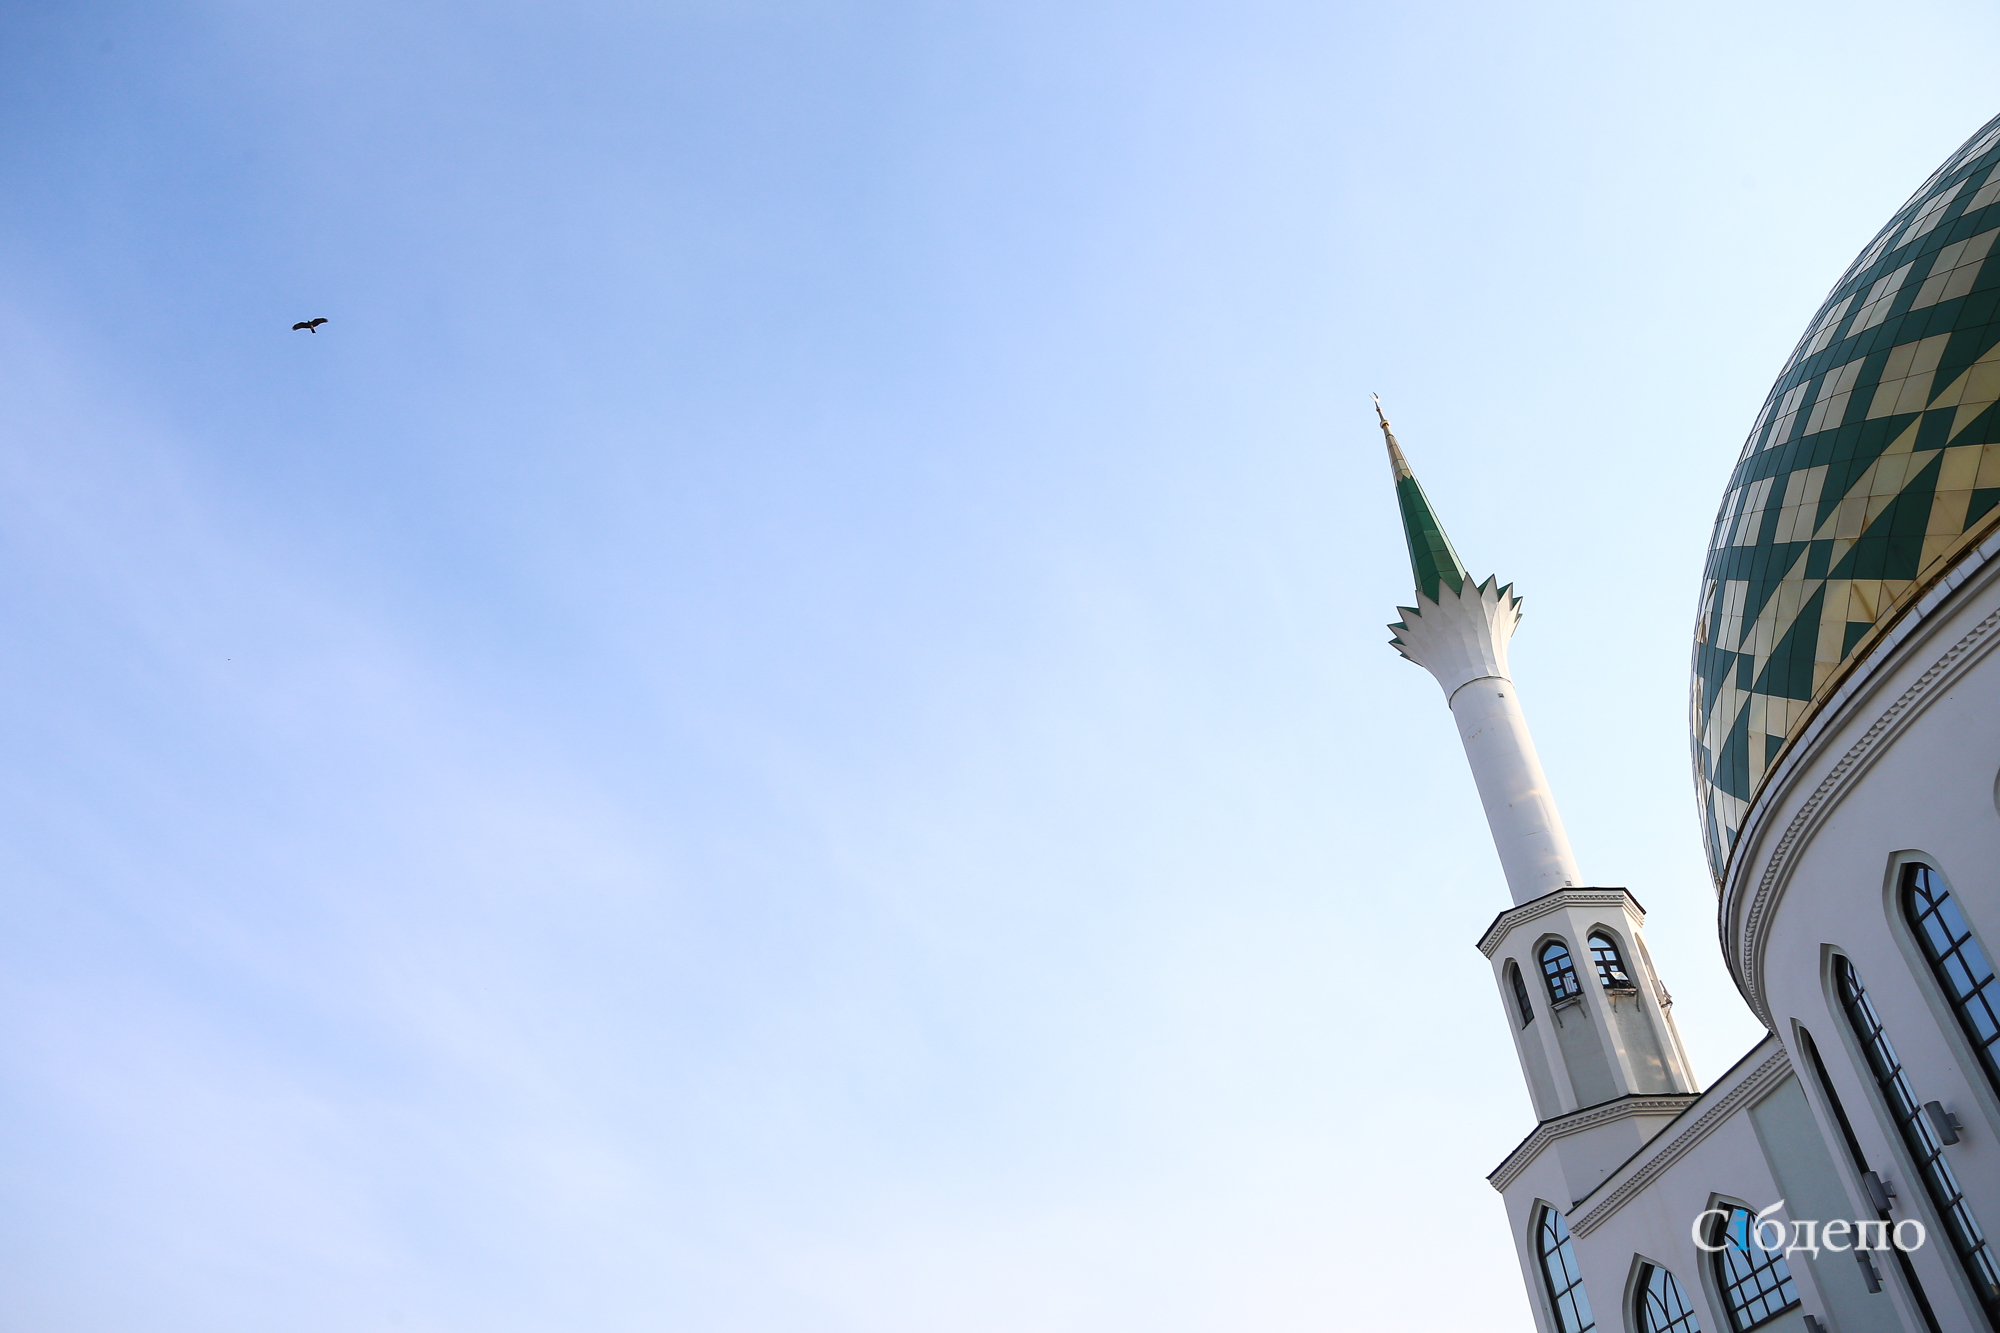 5 апреля праздник у мусульман. Рамадан Чечня. Курбан-байрам 2022. Мечеть в Новосибирске на Фрунзе Рамадан. Картинки с праздником Рамадан 2022.